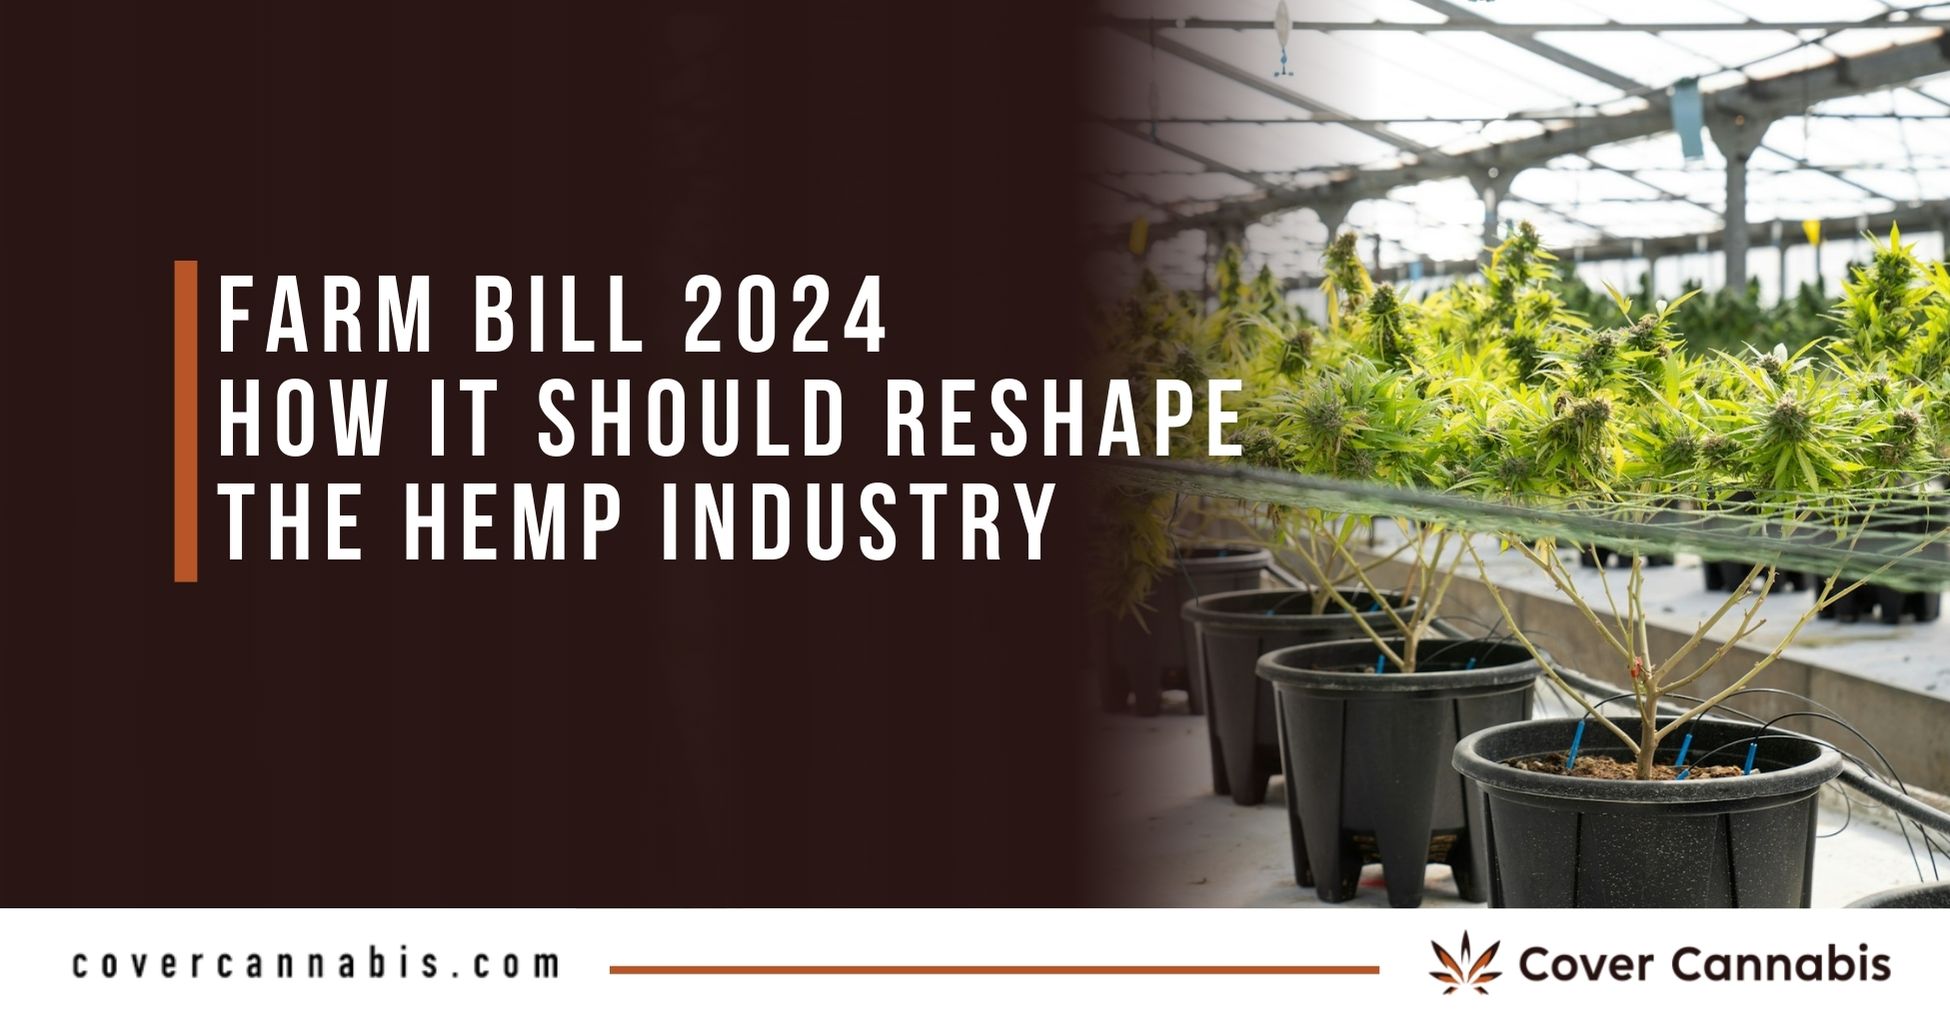 Farm Bill 2024 Update Reshaping the Hemp Industry